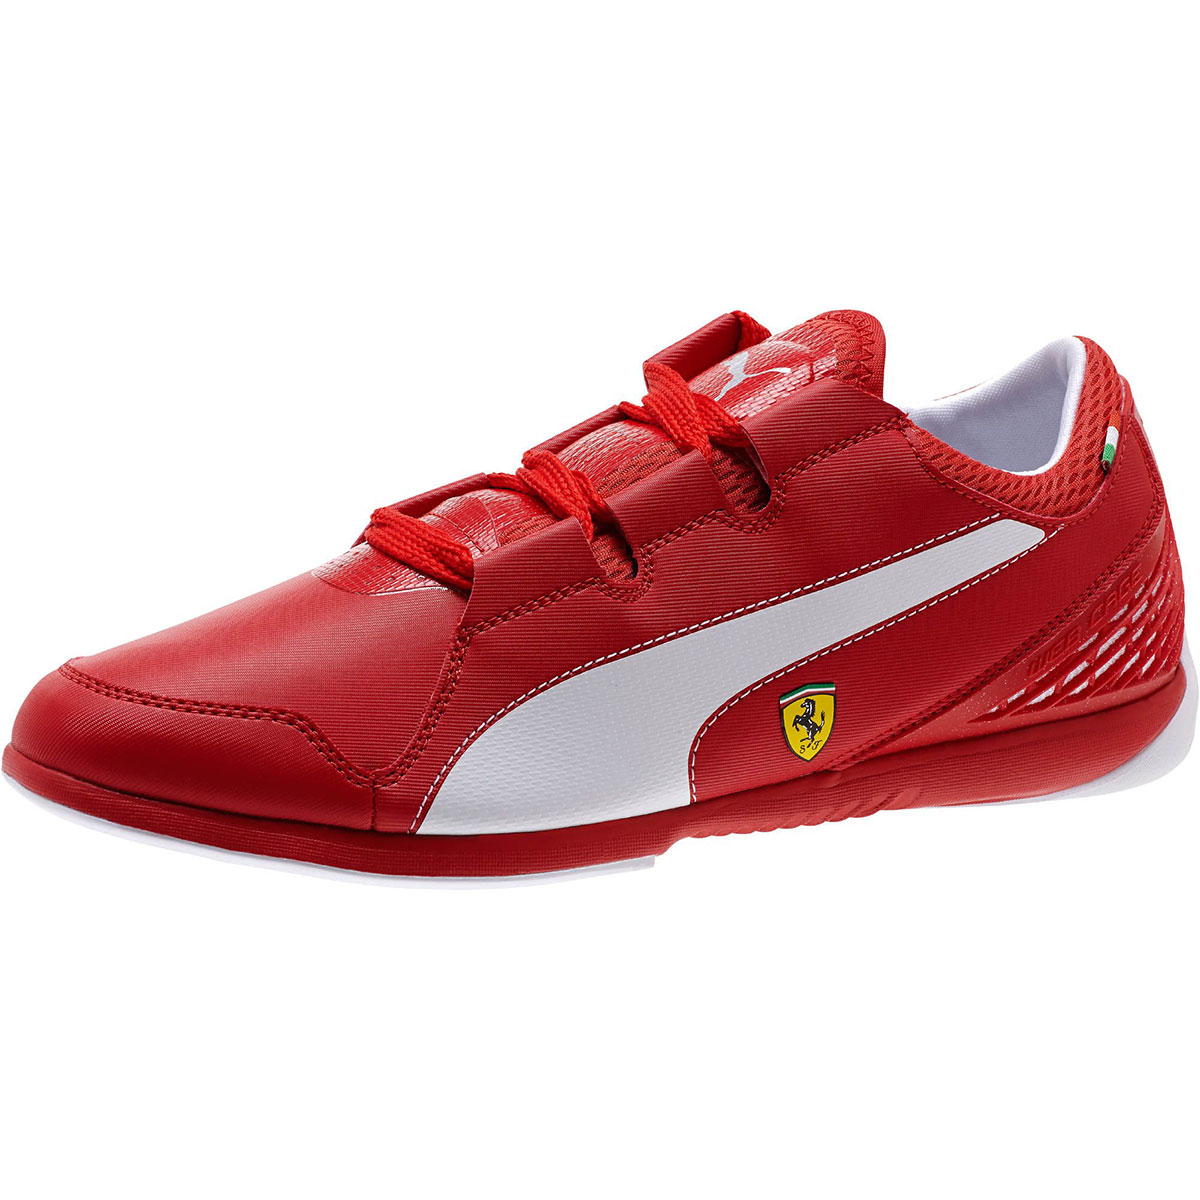 Puma Valorosso Ferrari red  305308-01